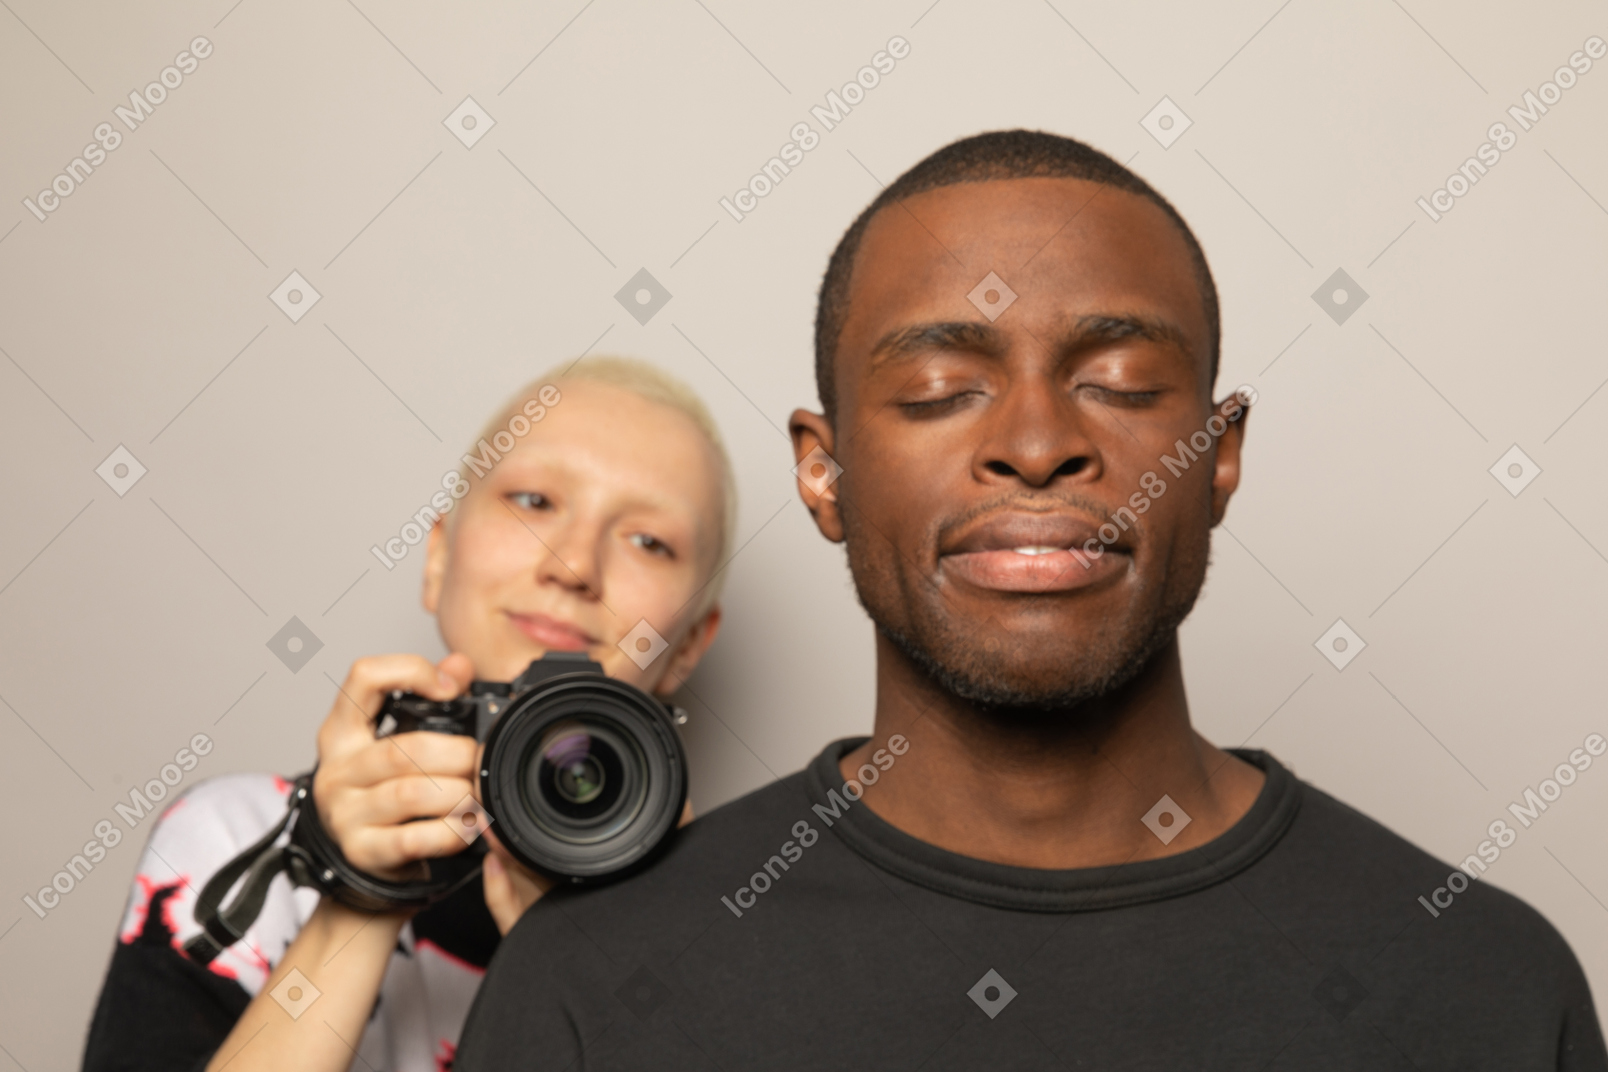 Smiling woman with camera looking at man